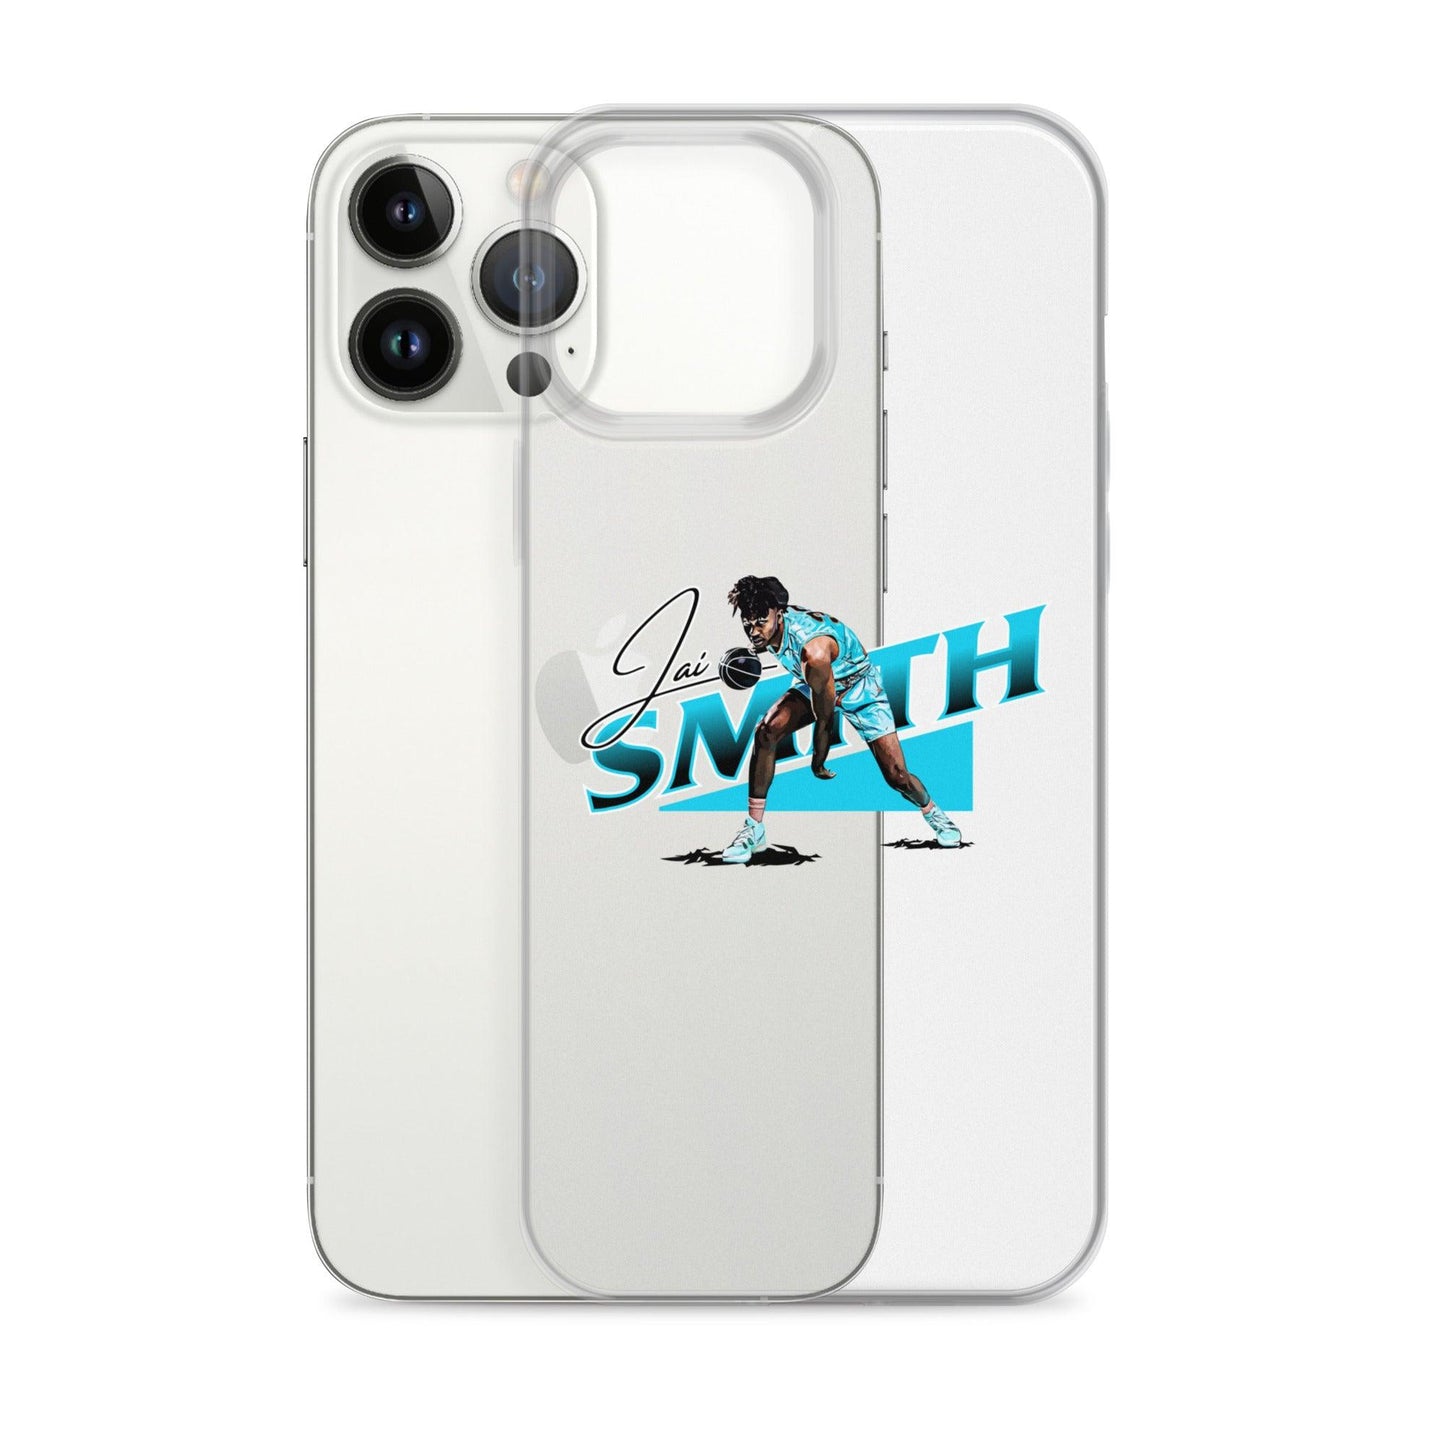 Jai Smith "Iceman" iPhone Case - Fan Arch